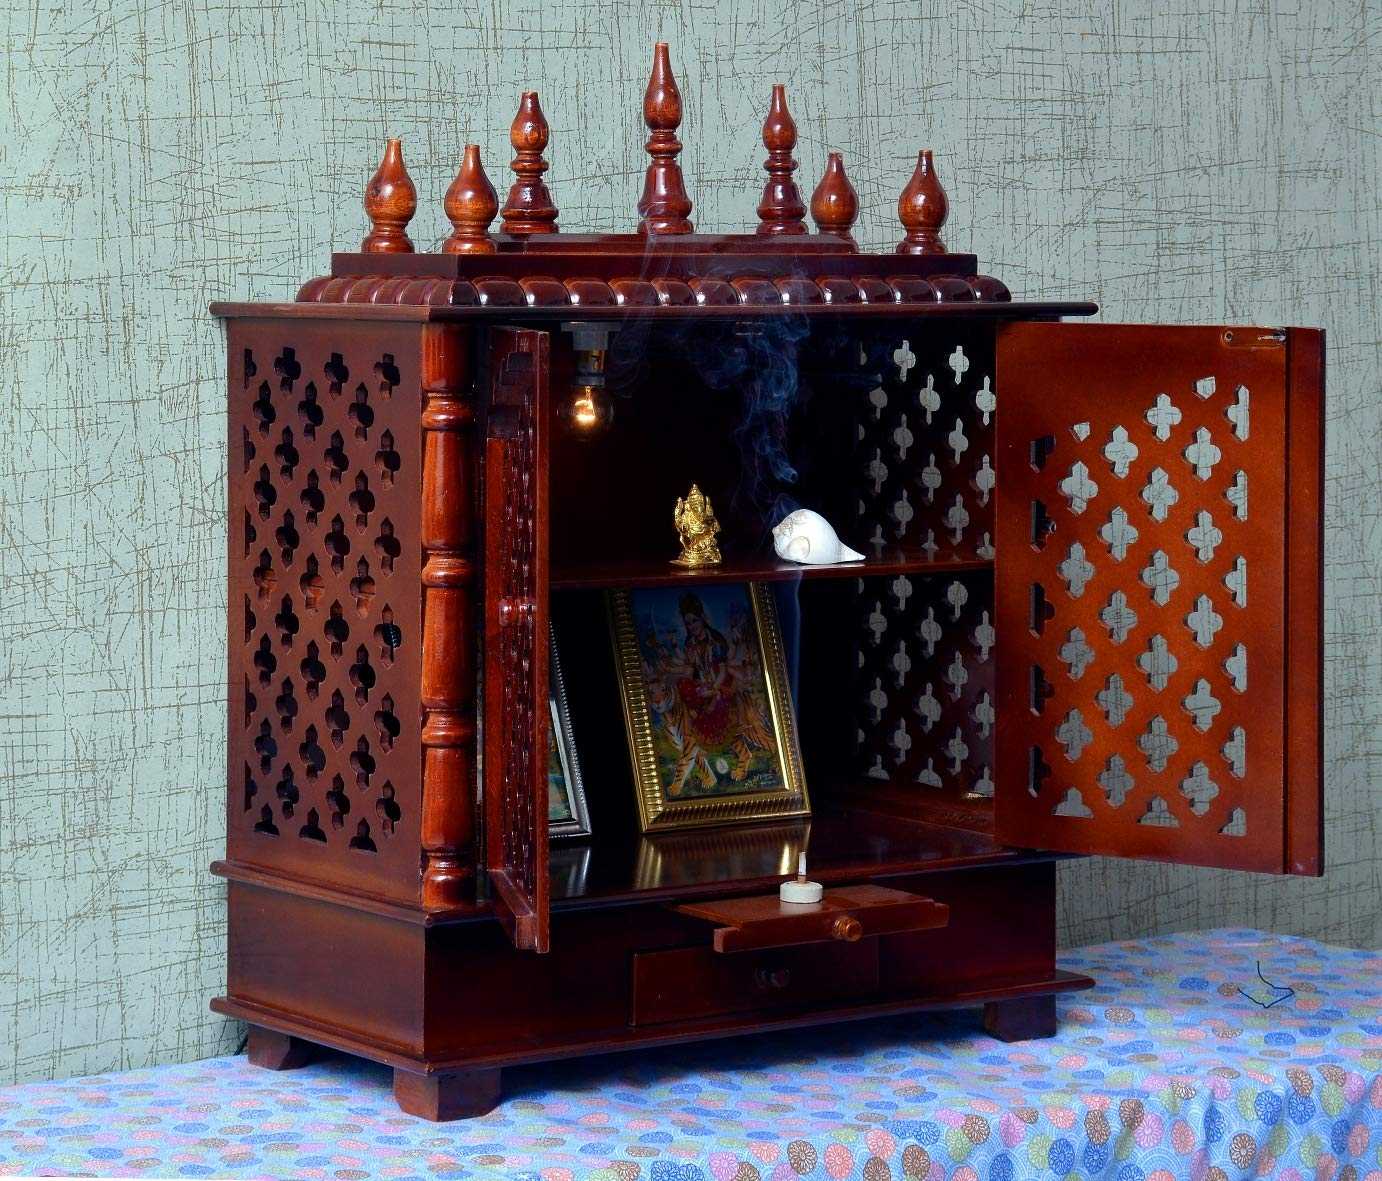 Buy Wooden Pooja Mandir For Home Design Online A Unique Gift Idea